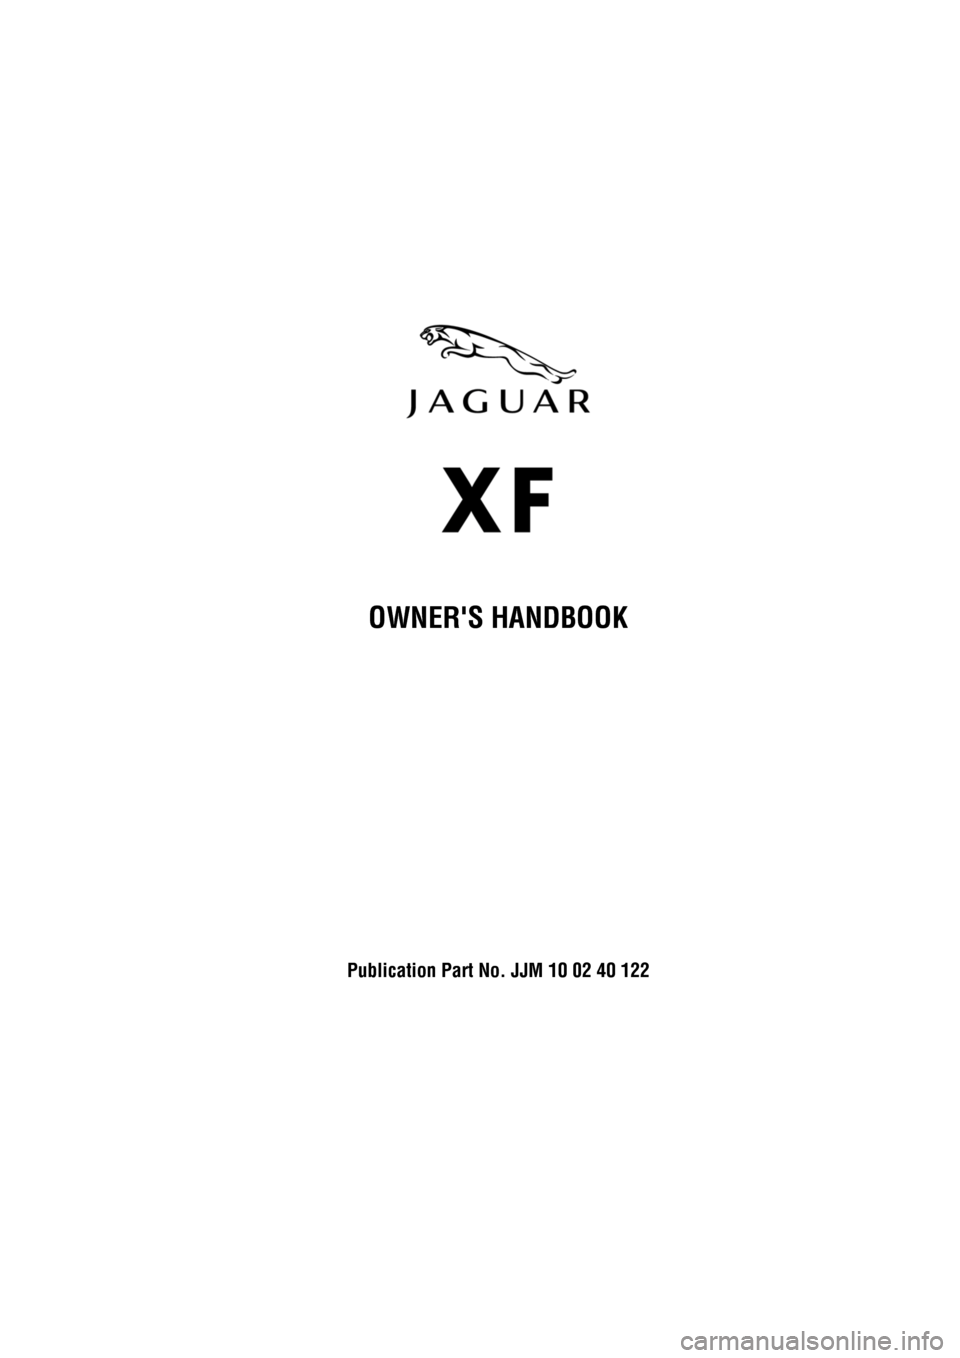 JAGUAR XF 2010 1.G Owners Manual R
(FM8) SEMCON JLR OWNER GUIDE VER 1.00  EURO
LANGUAGE: english-en; MARQUE: jaguar; MODEL: XF
OWNERS HANDBOOK
Publication Part No. JJM 10 02 40 122 